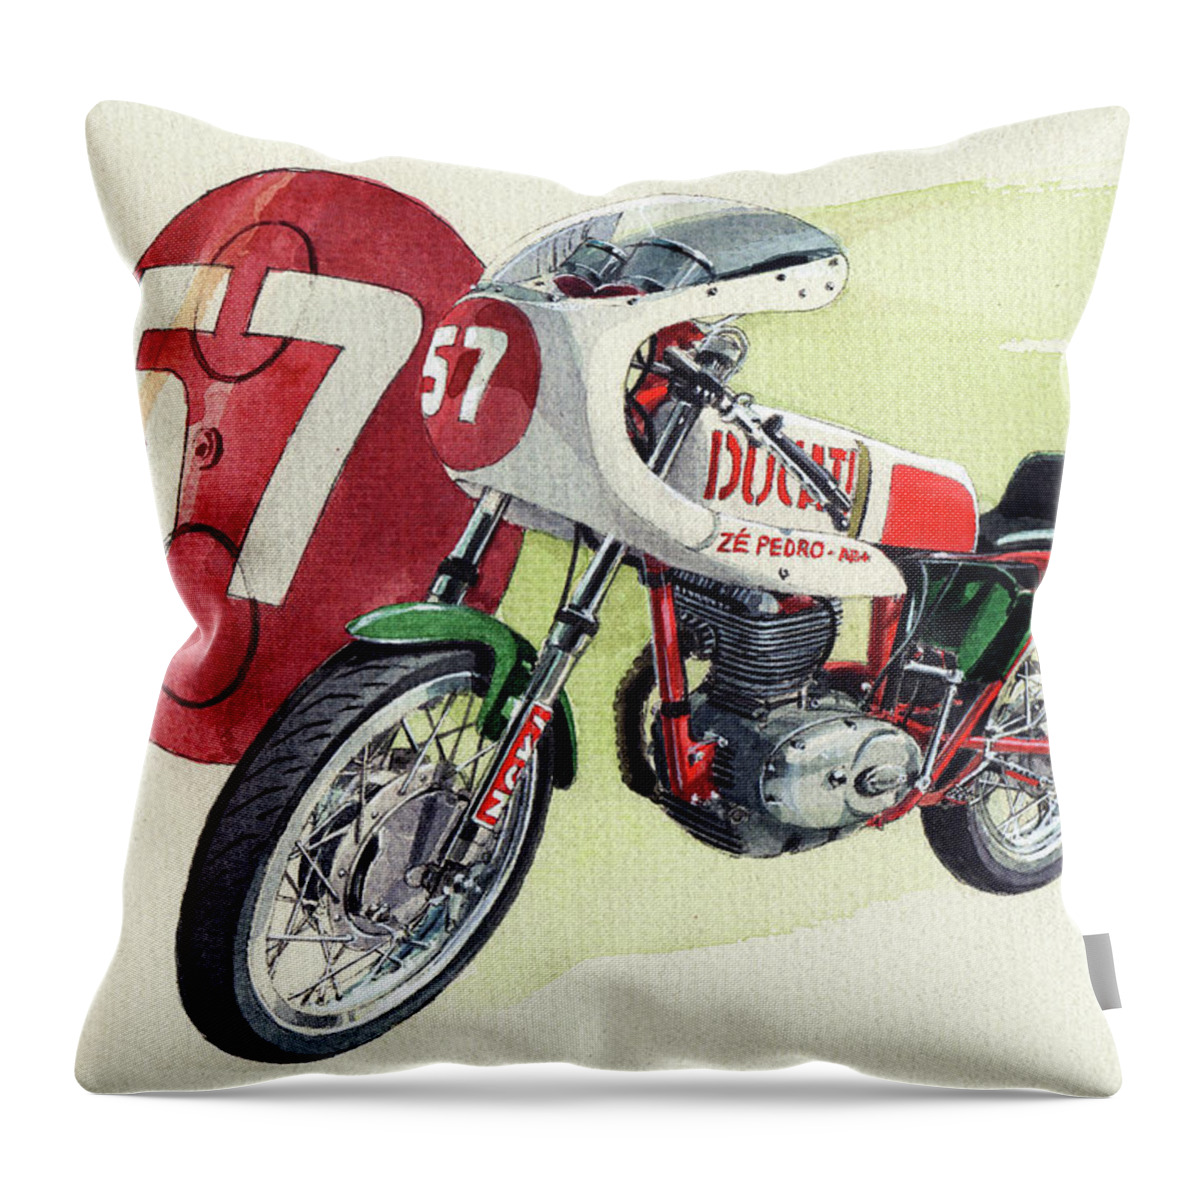 Ducati Classic Racer Throw Pillow featuring the painting Ducati Classic Racer by Yoshiharu Miyakawa